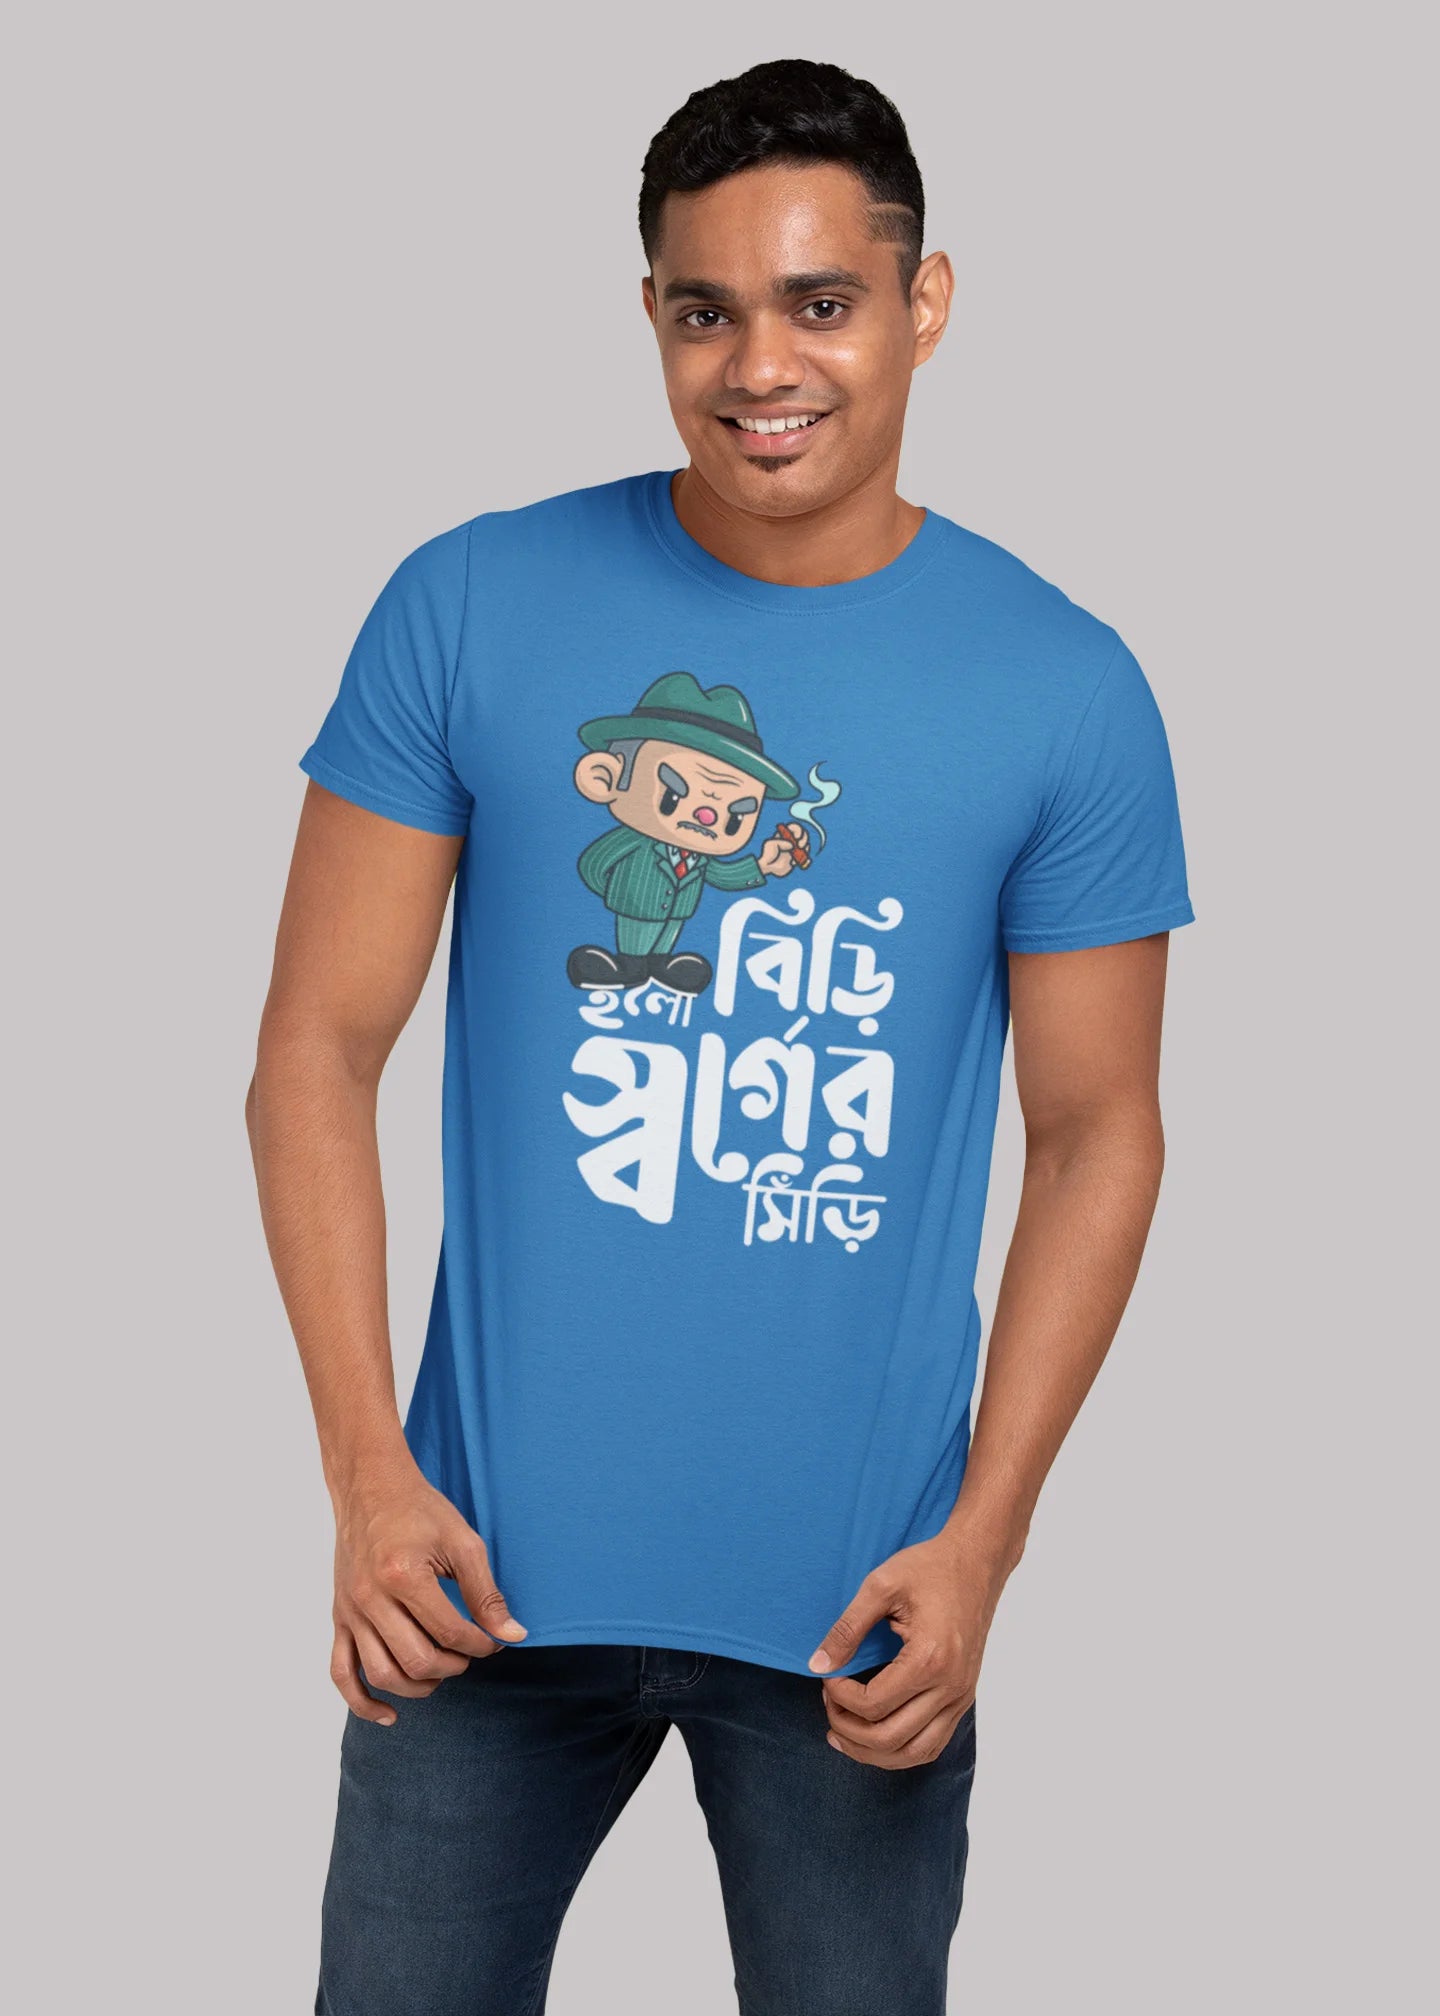 Biri holo swarger siri bengali Printed Half Sleeve Premium Cotton T-shirt